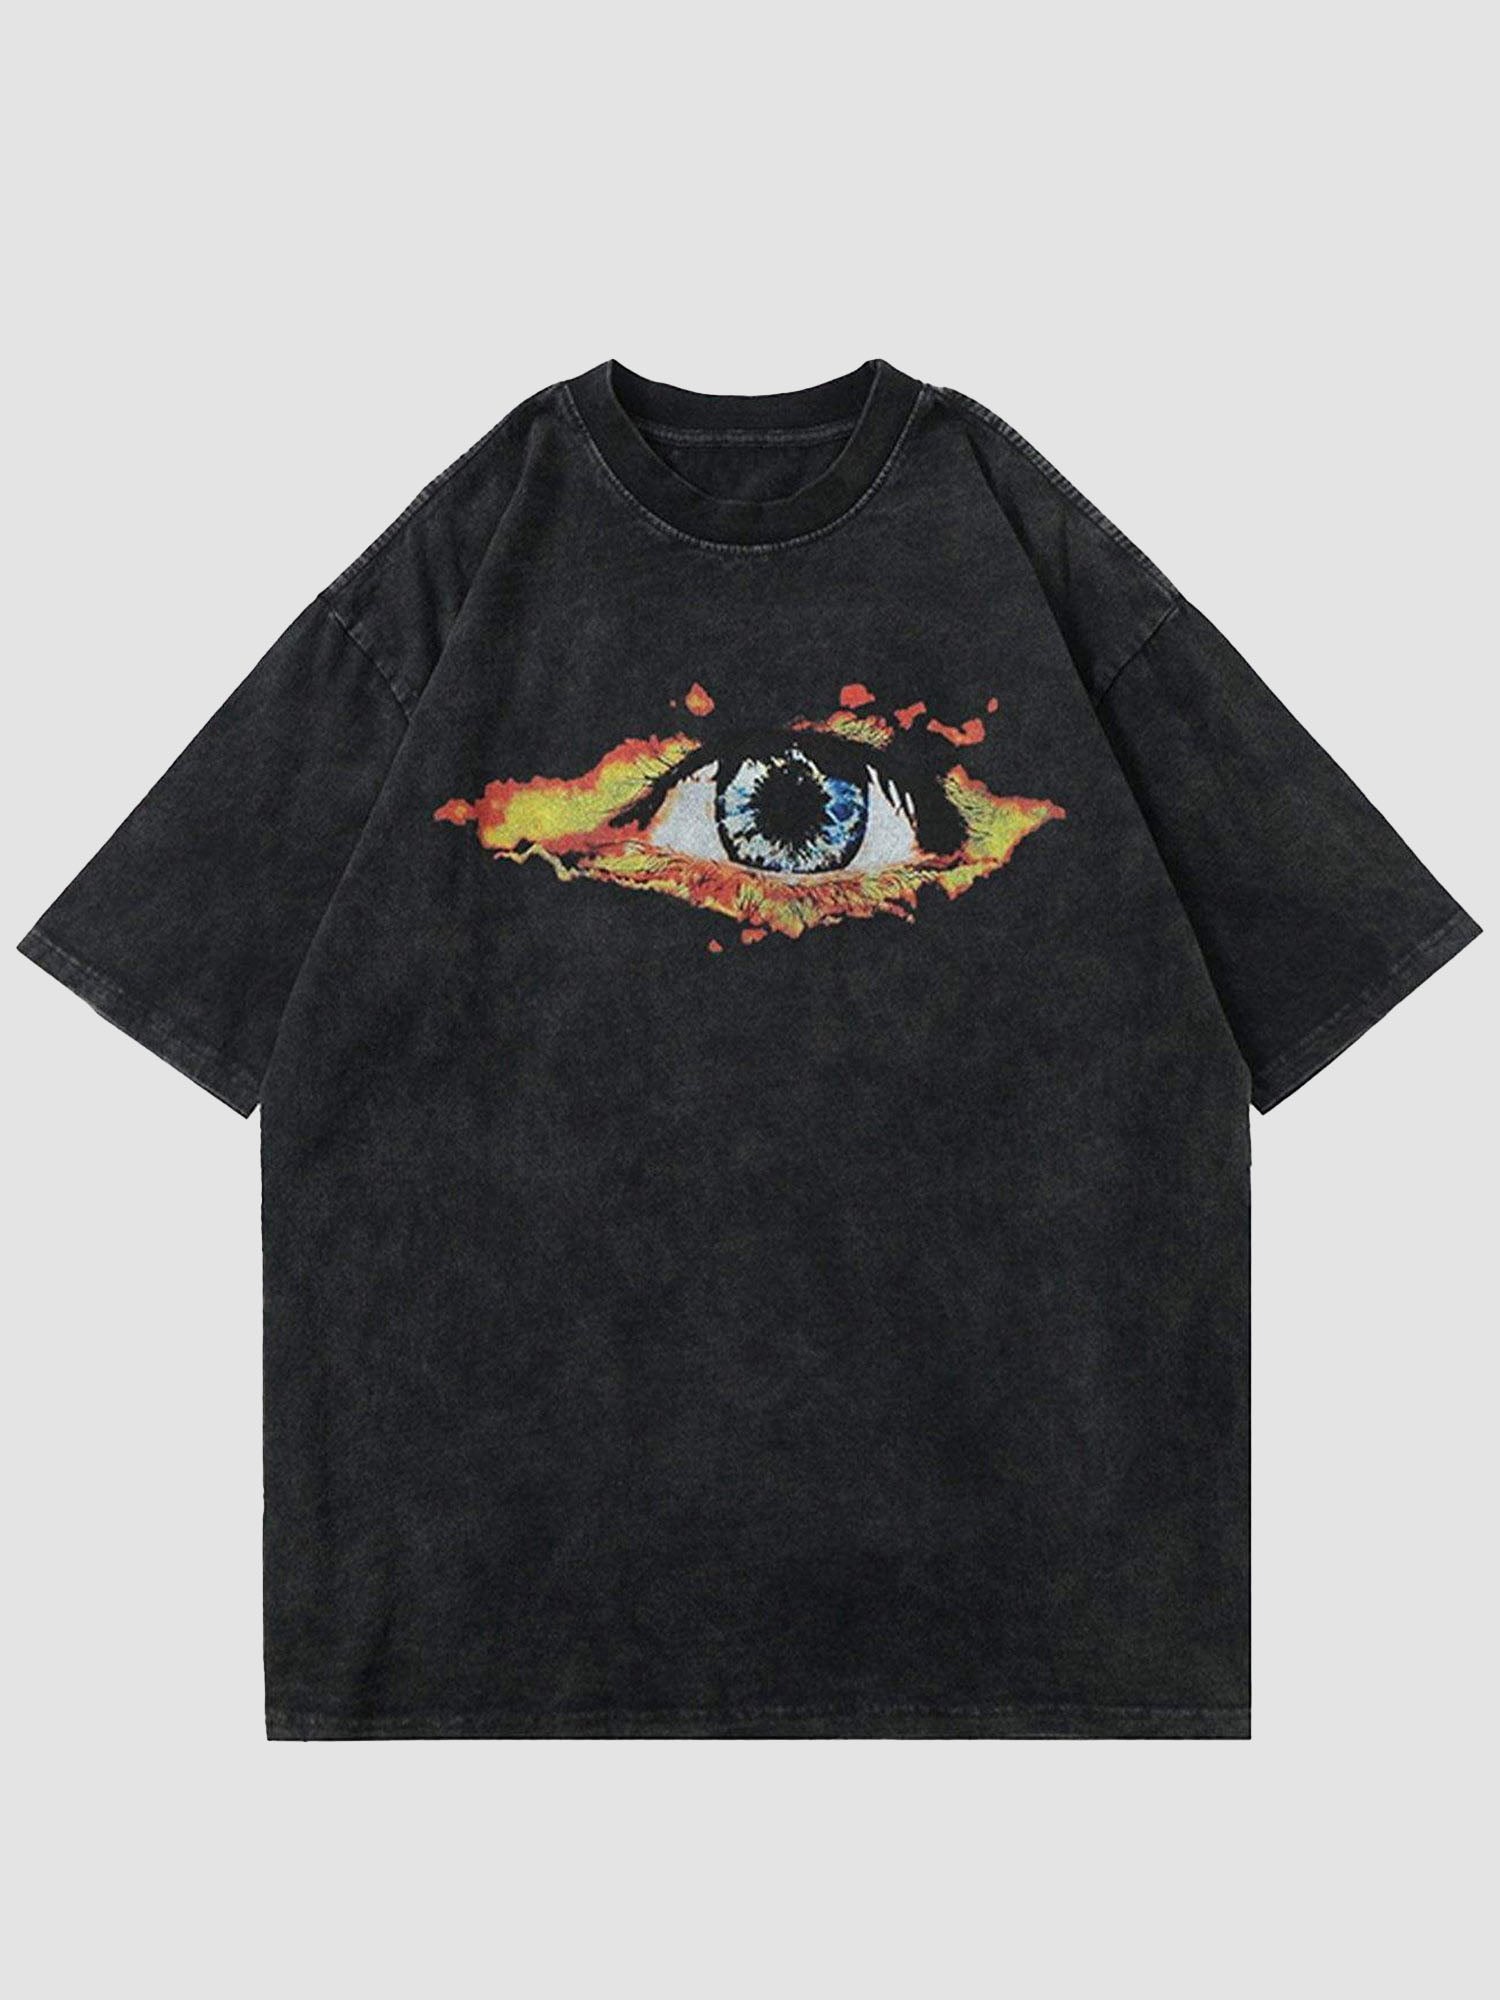 JUSTNOTAG Vintage Eye Graphic T-shirts